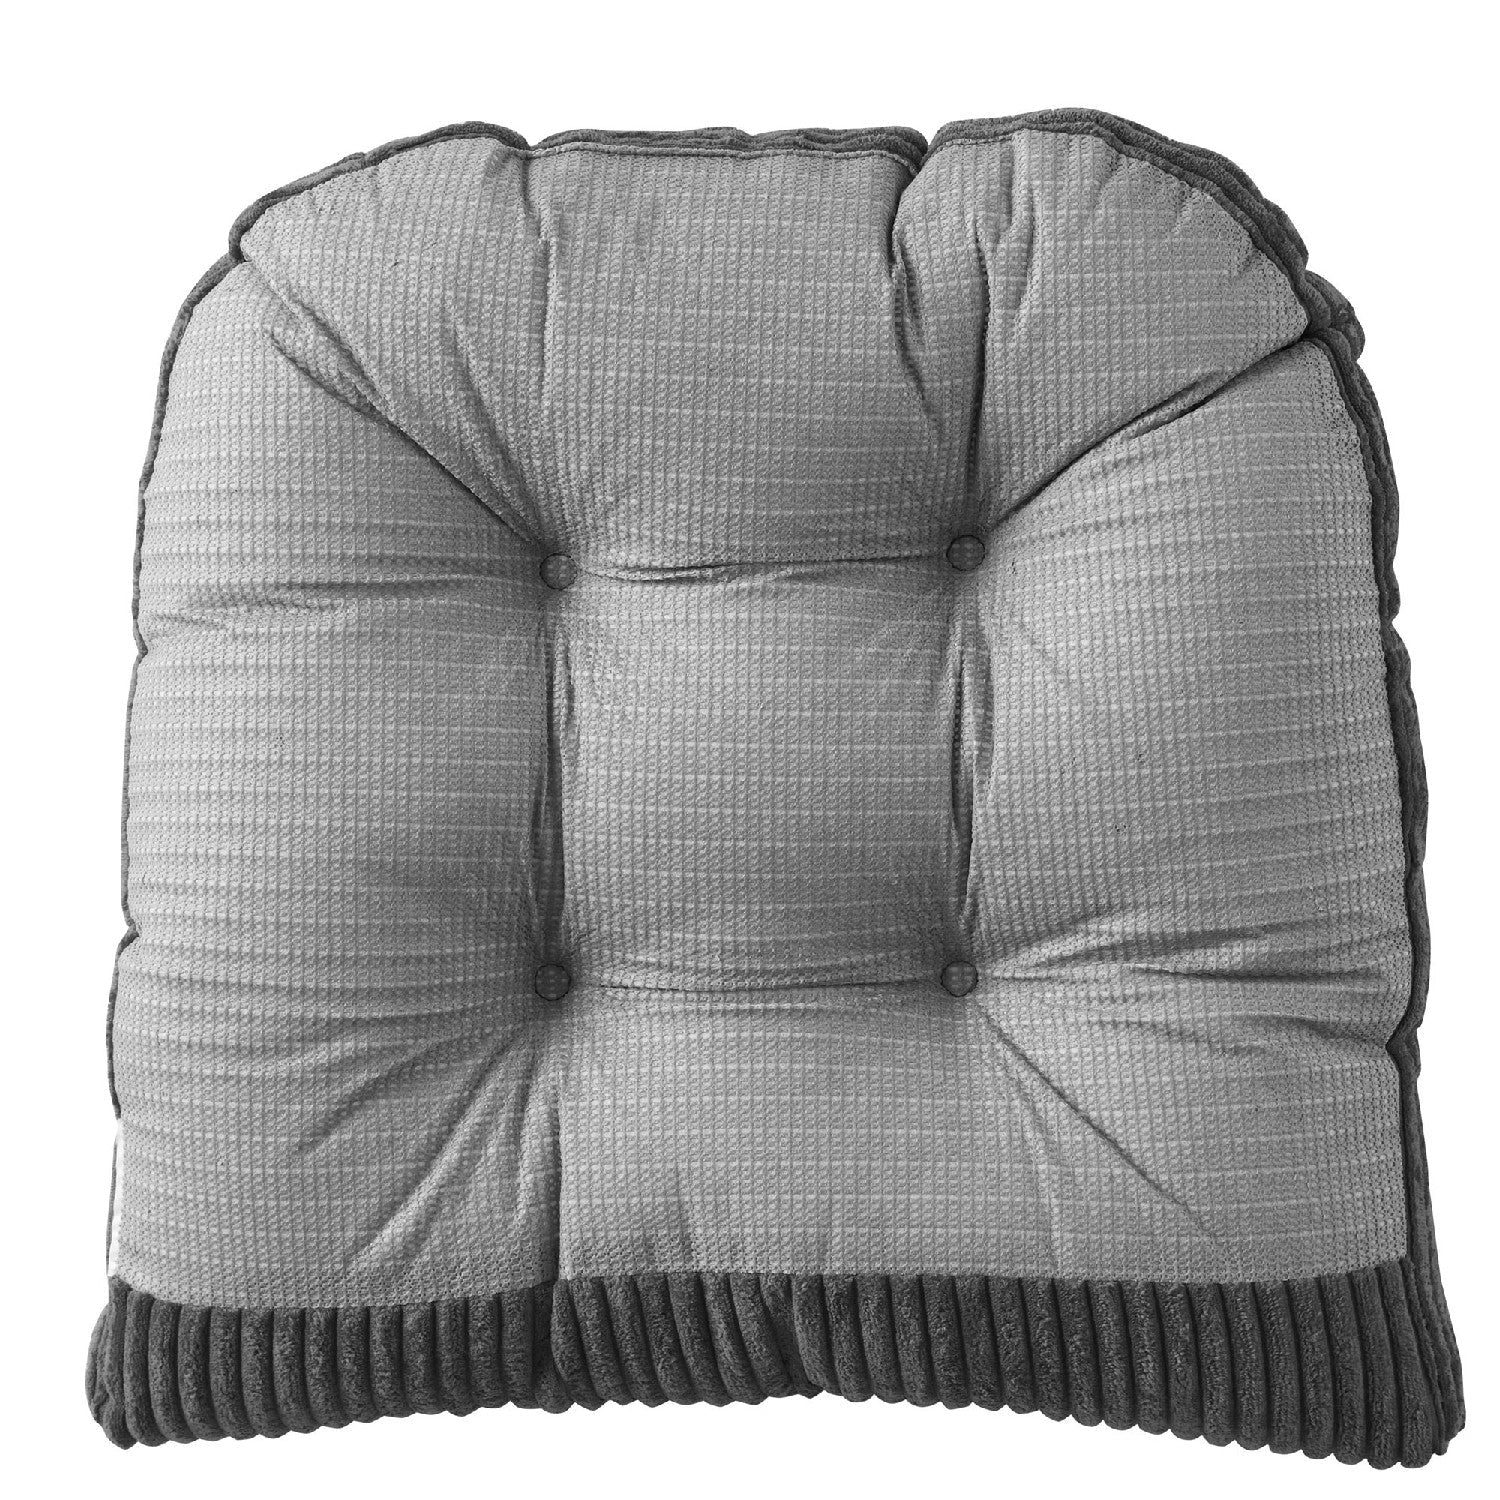 Velvet 2-Piece Rocking Chair Cushion Set Gray - Back